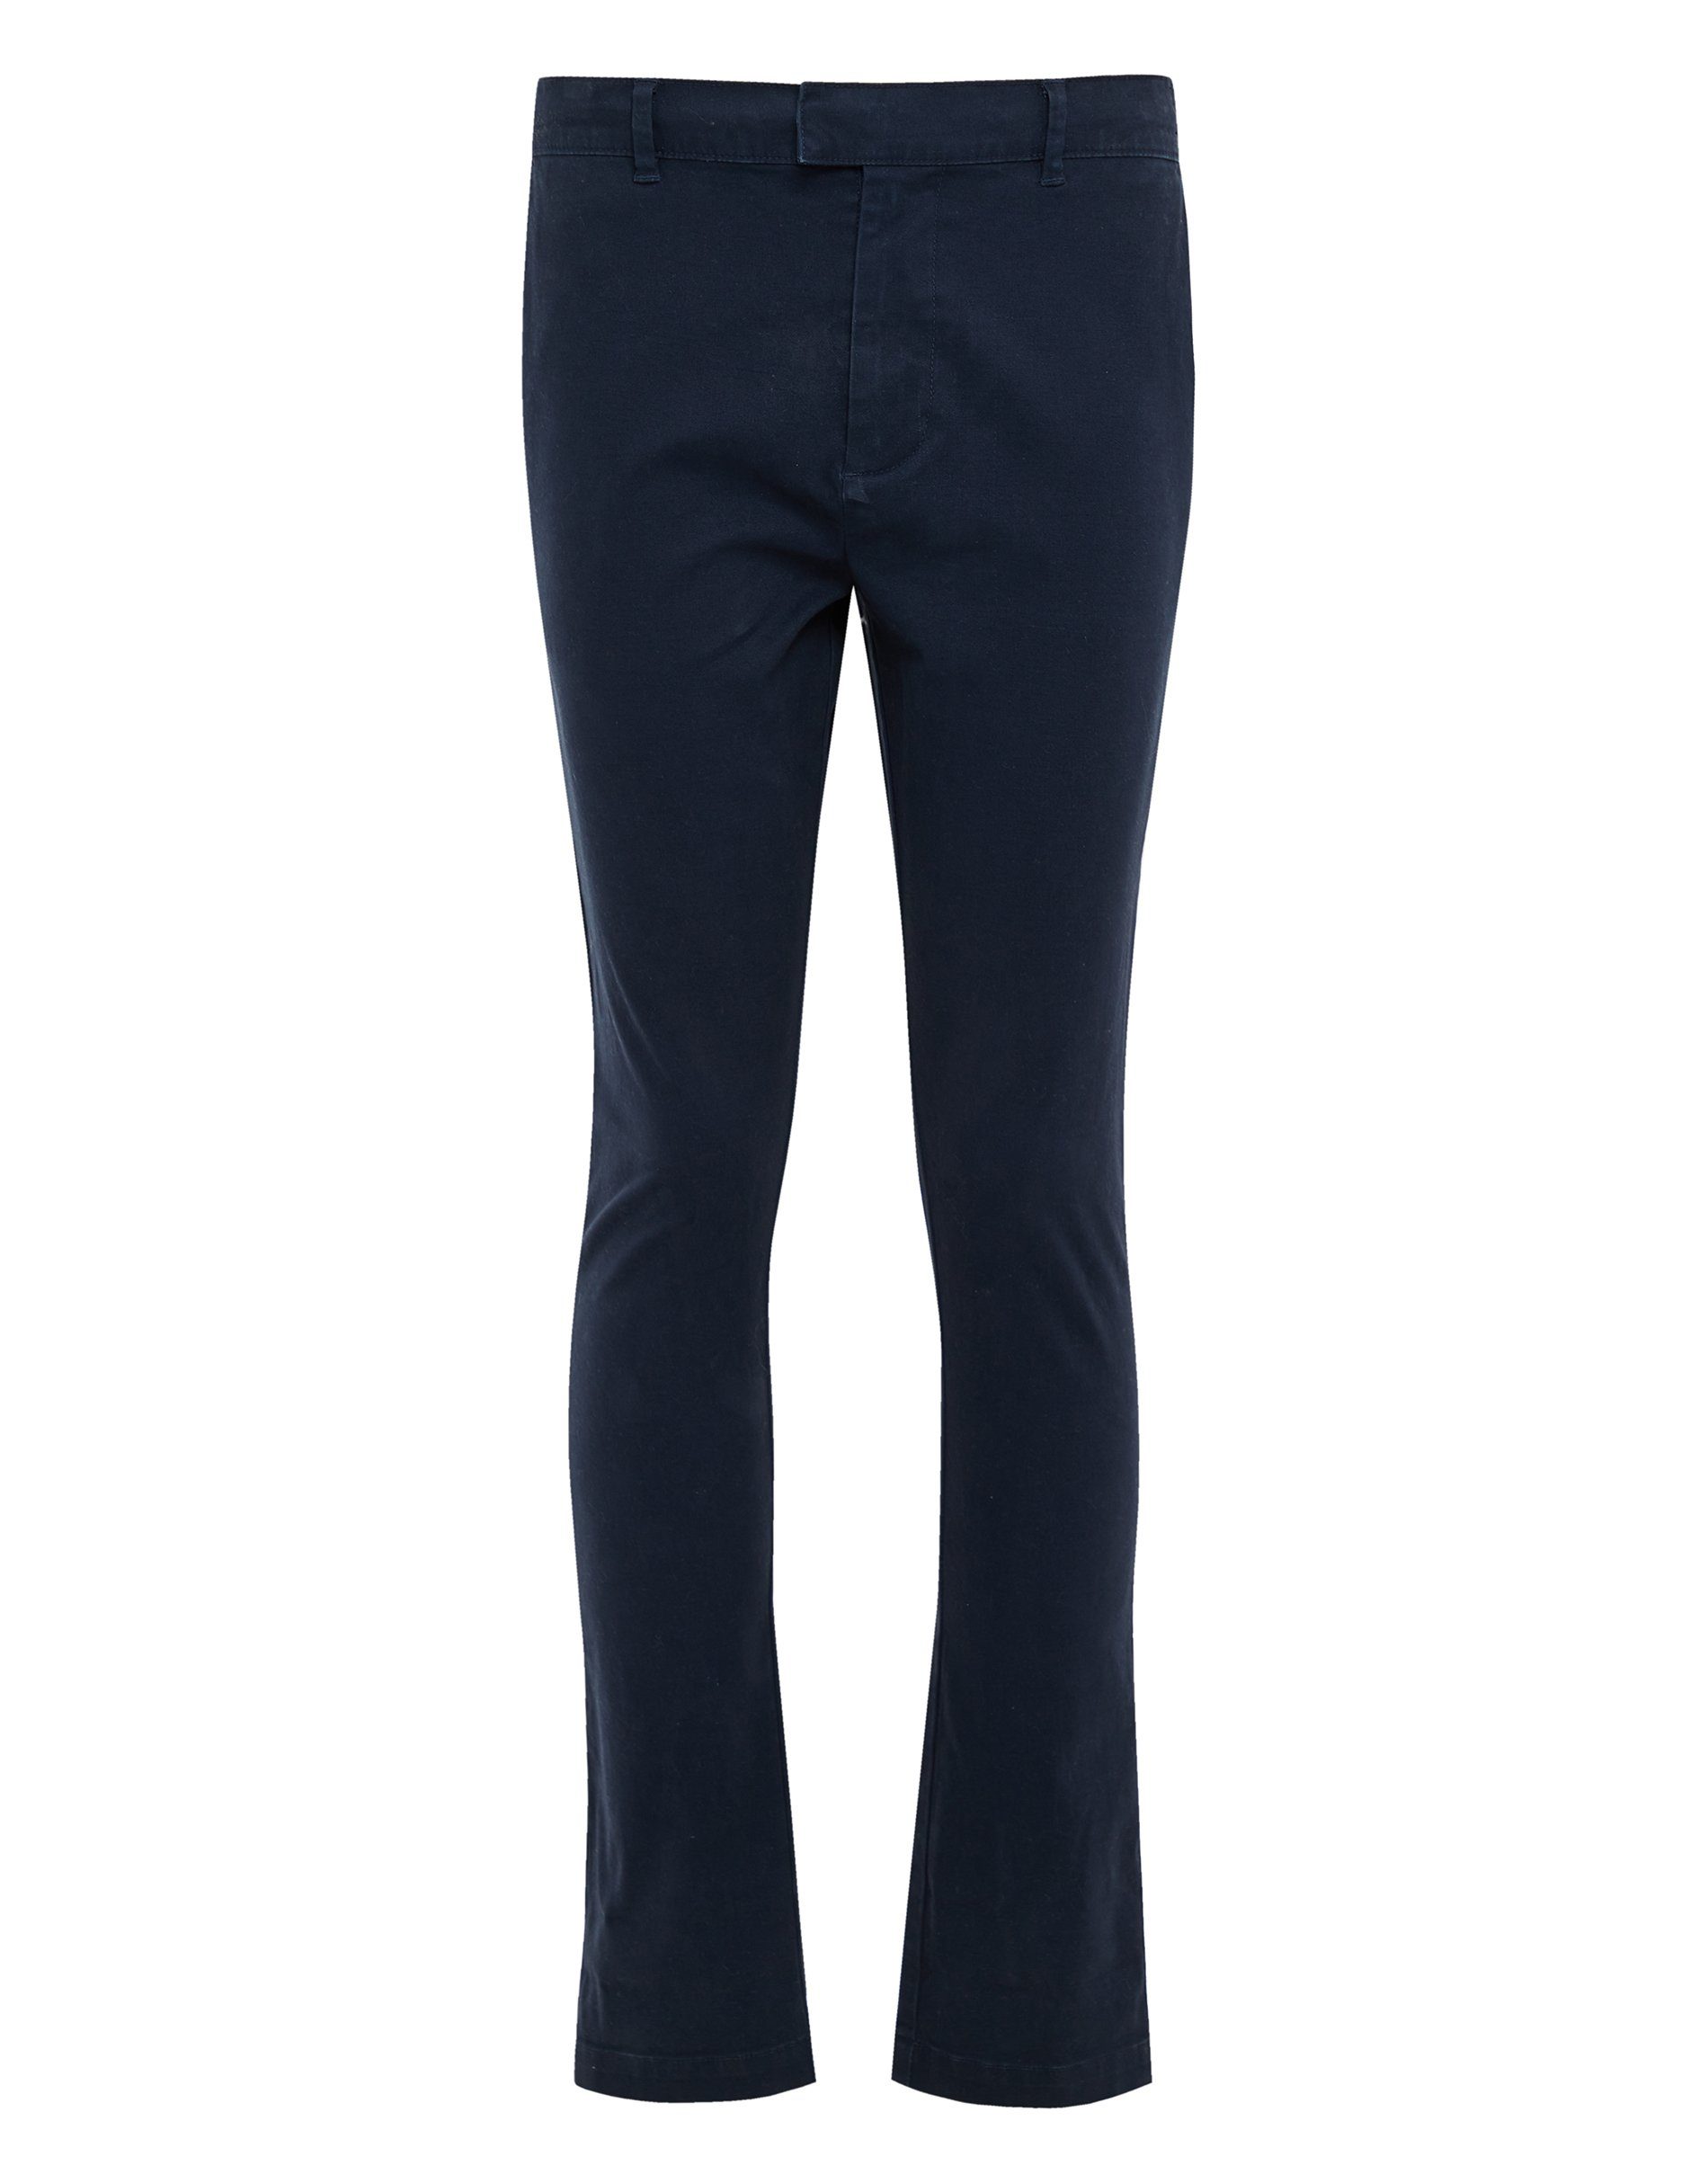 Threadbare Chinohose THB Trouser Chino Navy- Marley Stretch dunkelblau